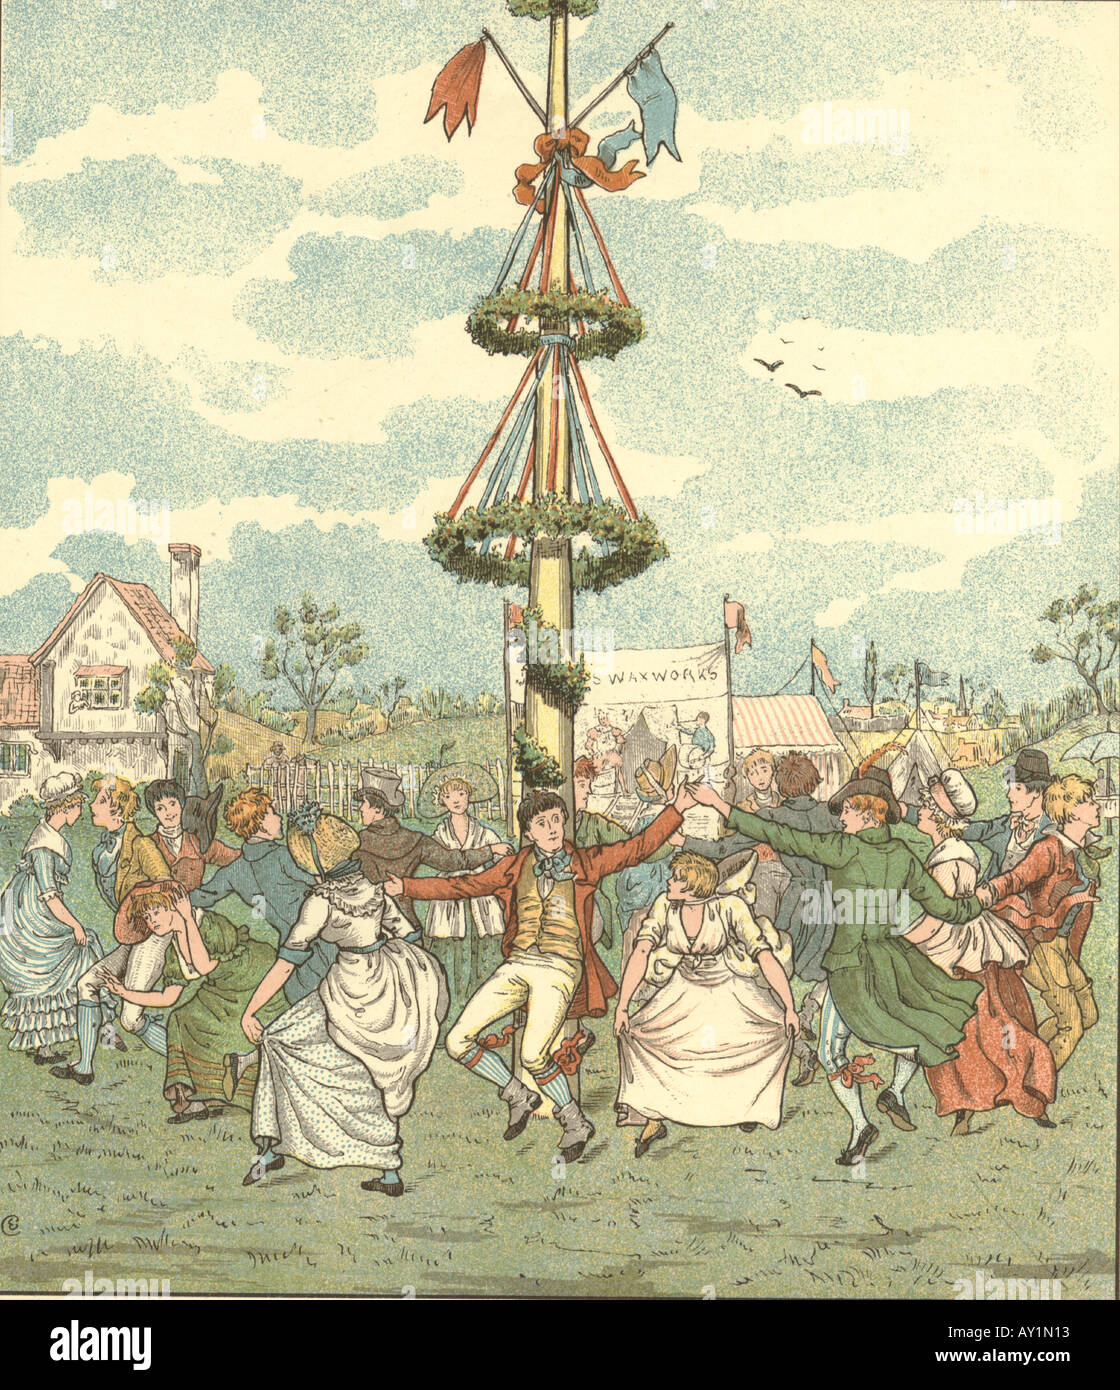 Dancing round the Maypole, circa 1890 Stock Photo